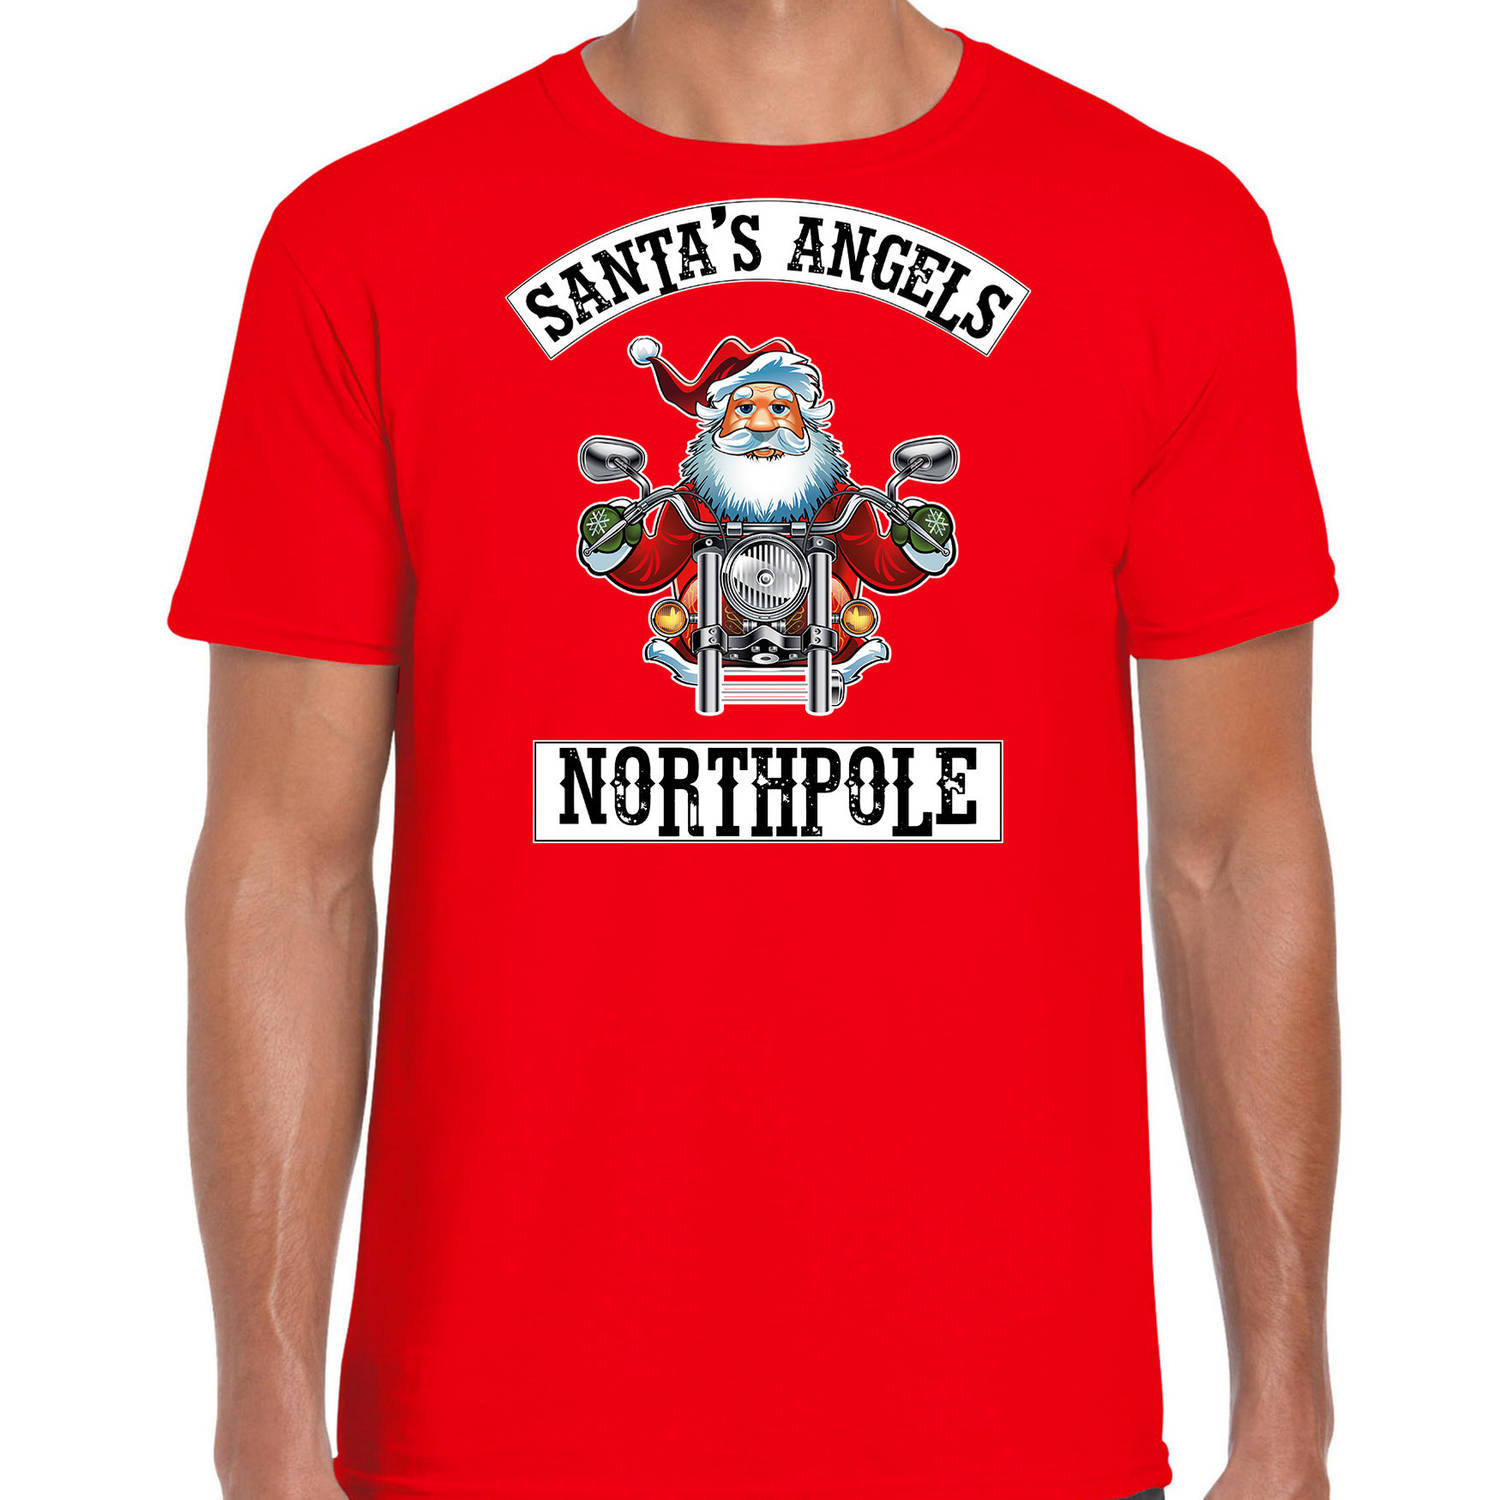 Rood Kerstshirt / Kerstkleding Santas angels Northpole voor heren S - kerst t-shirts